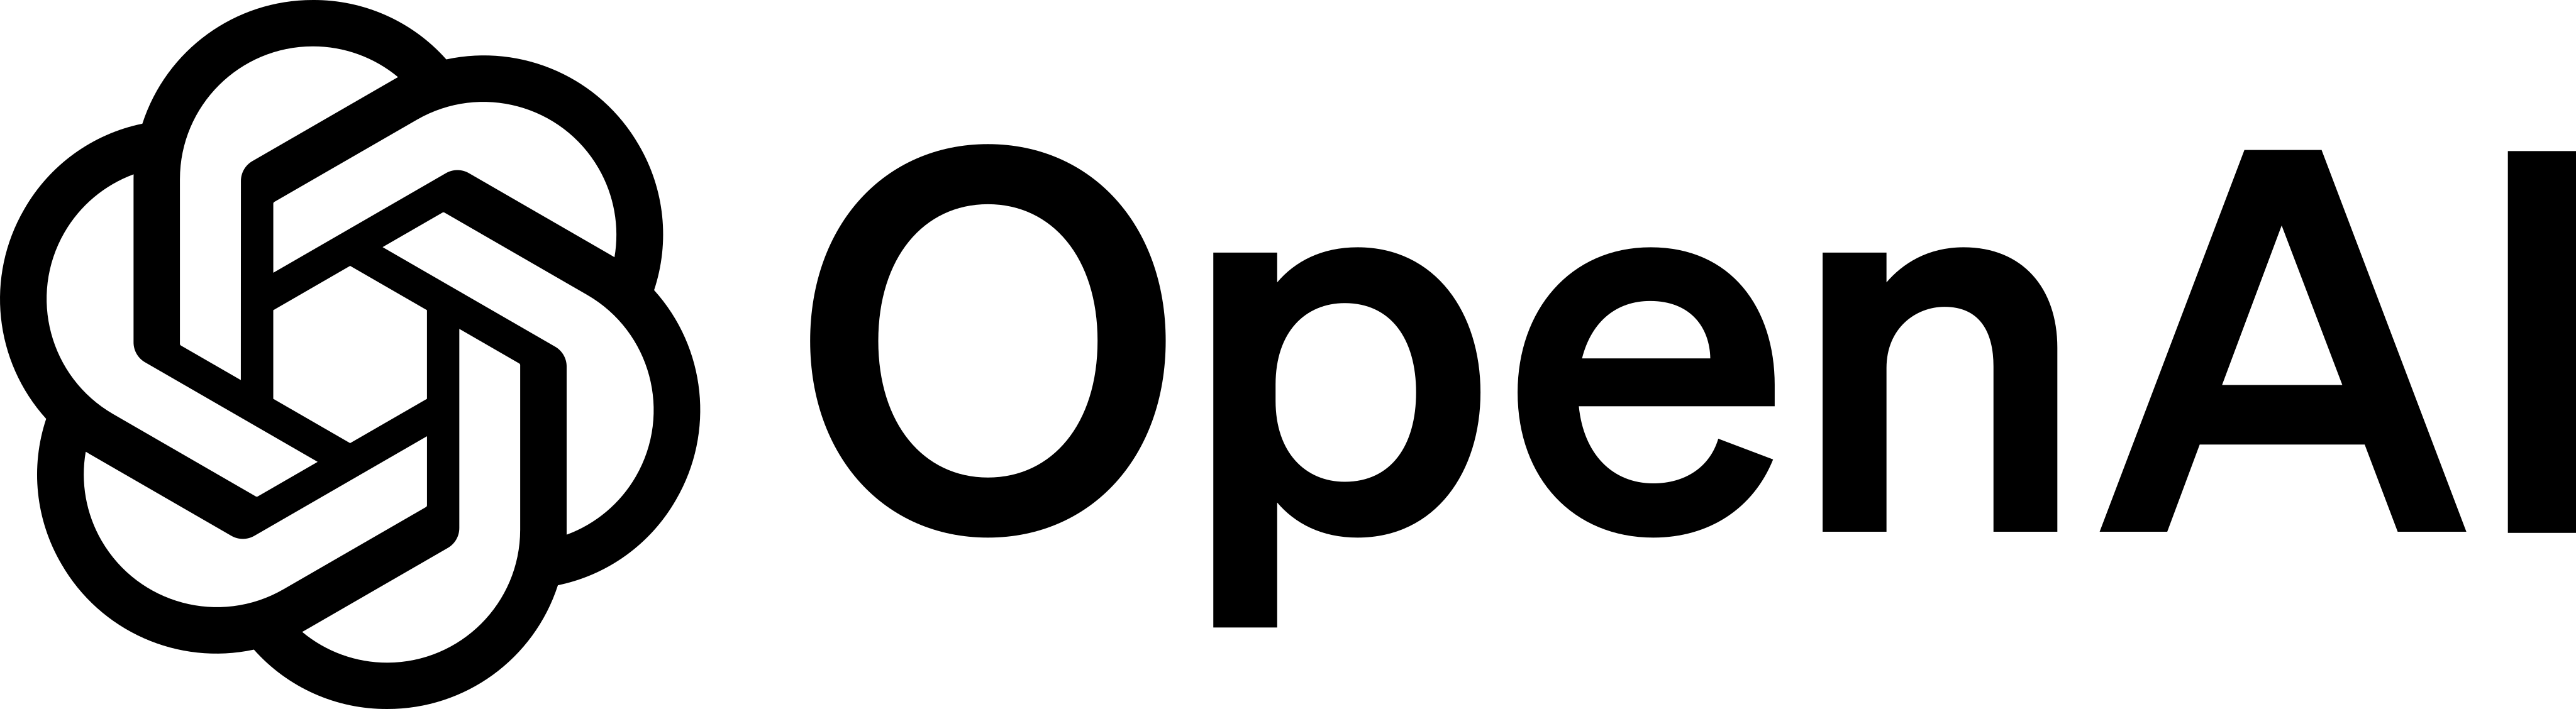 openai logo - OpenAI Logo